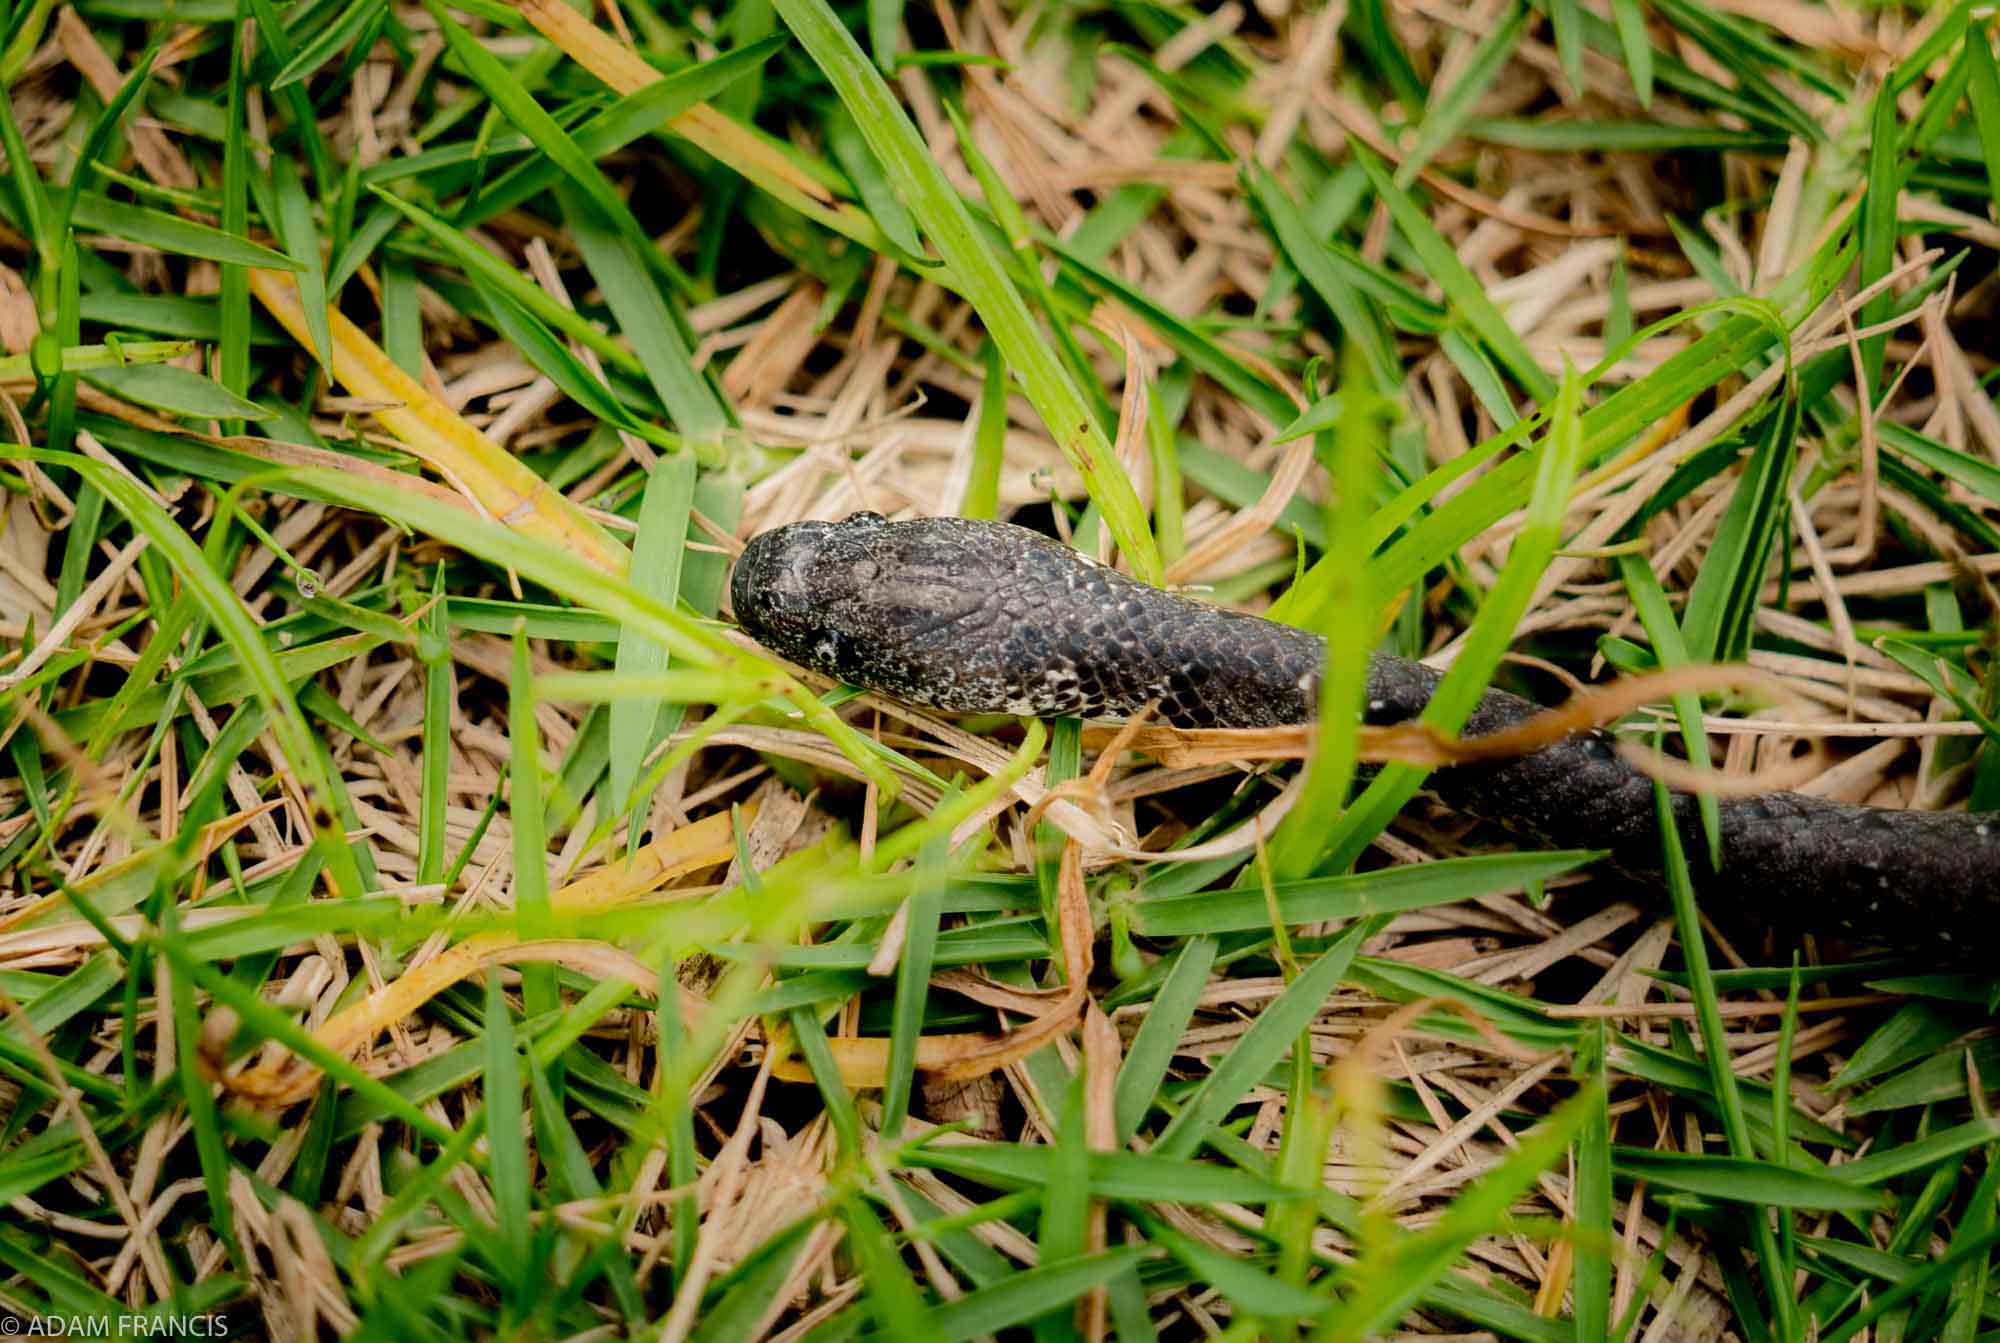 Copy of White Spotted Slug Snake